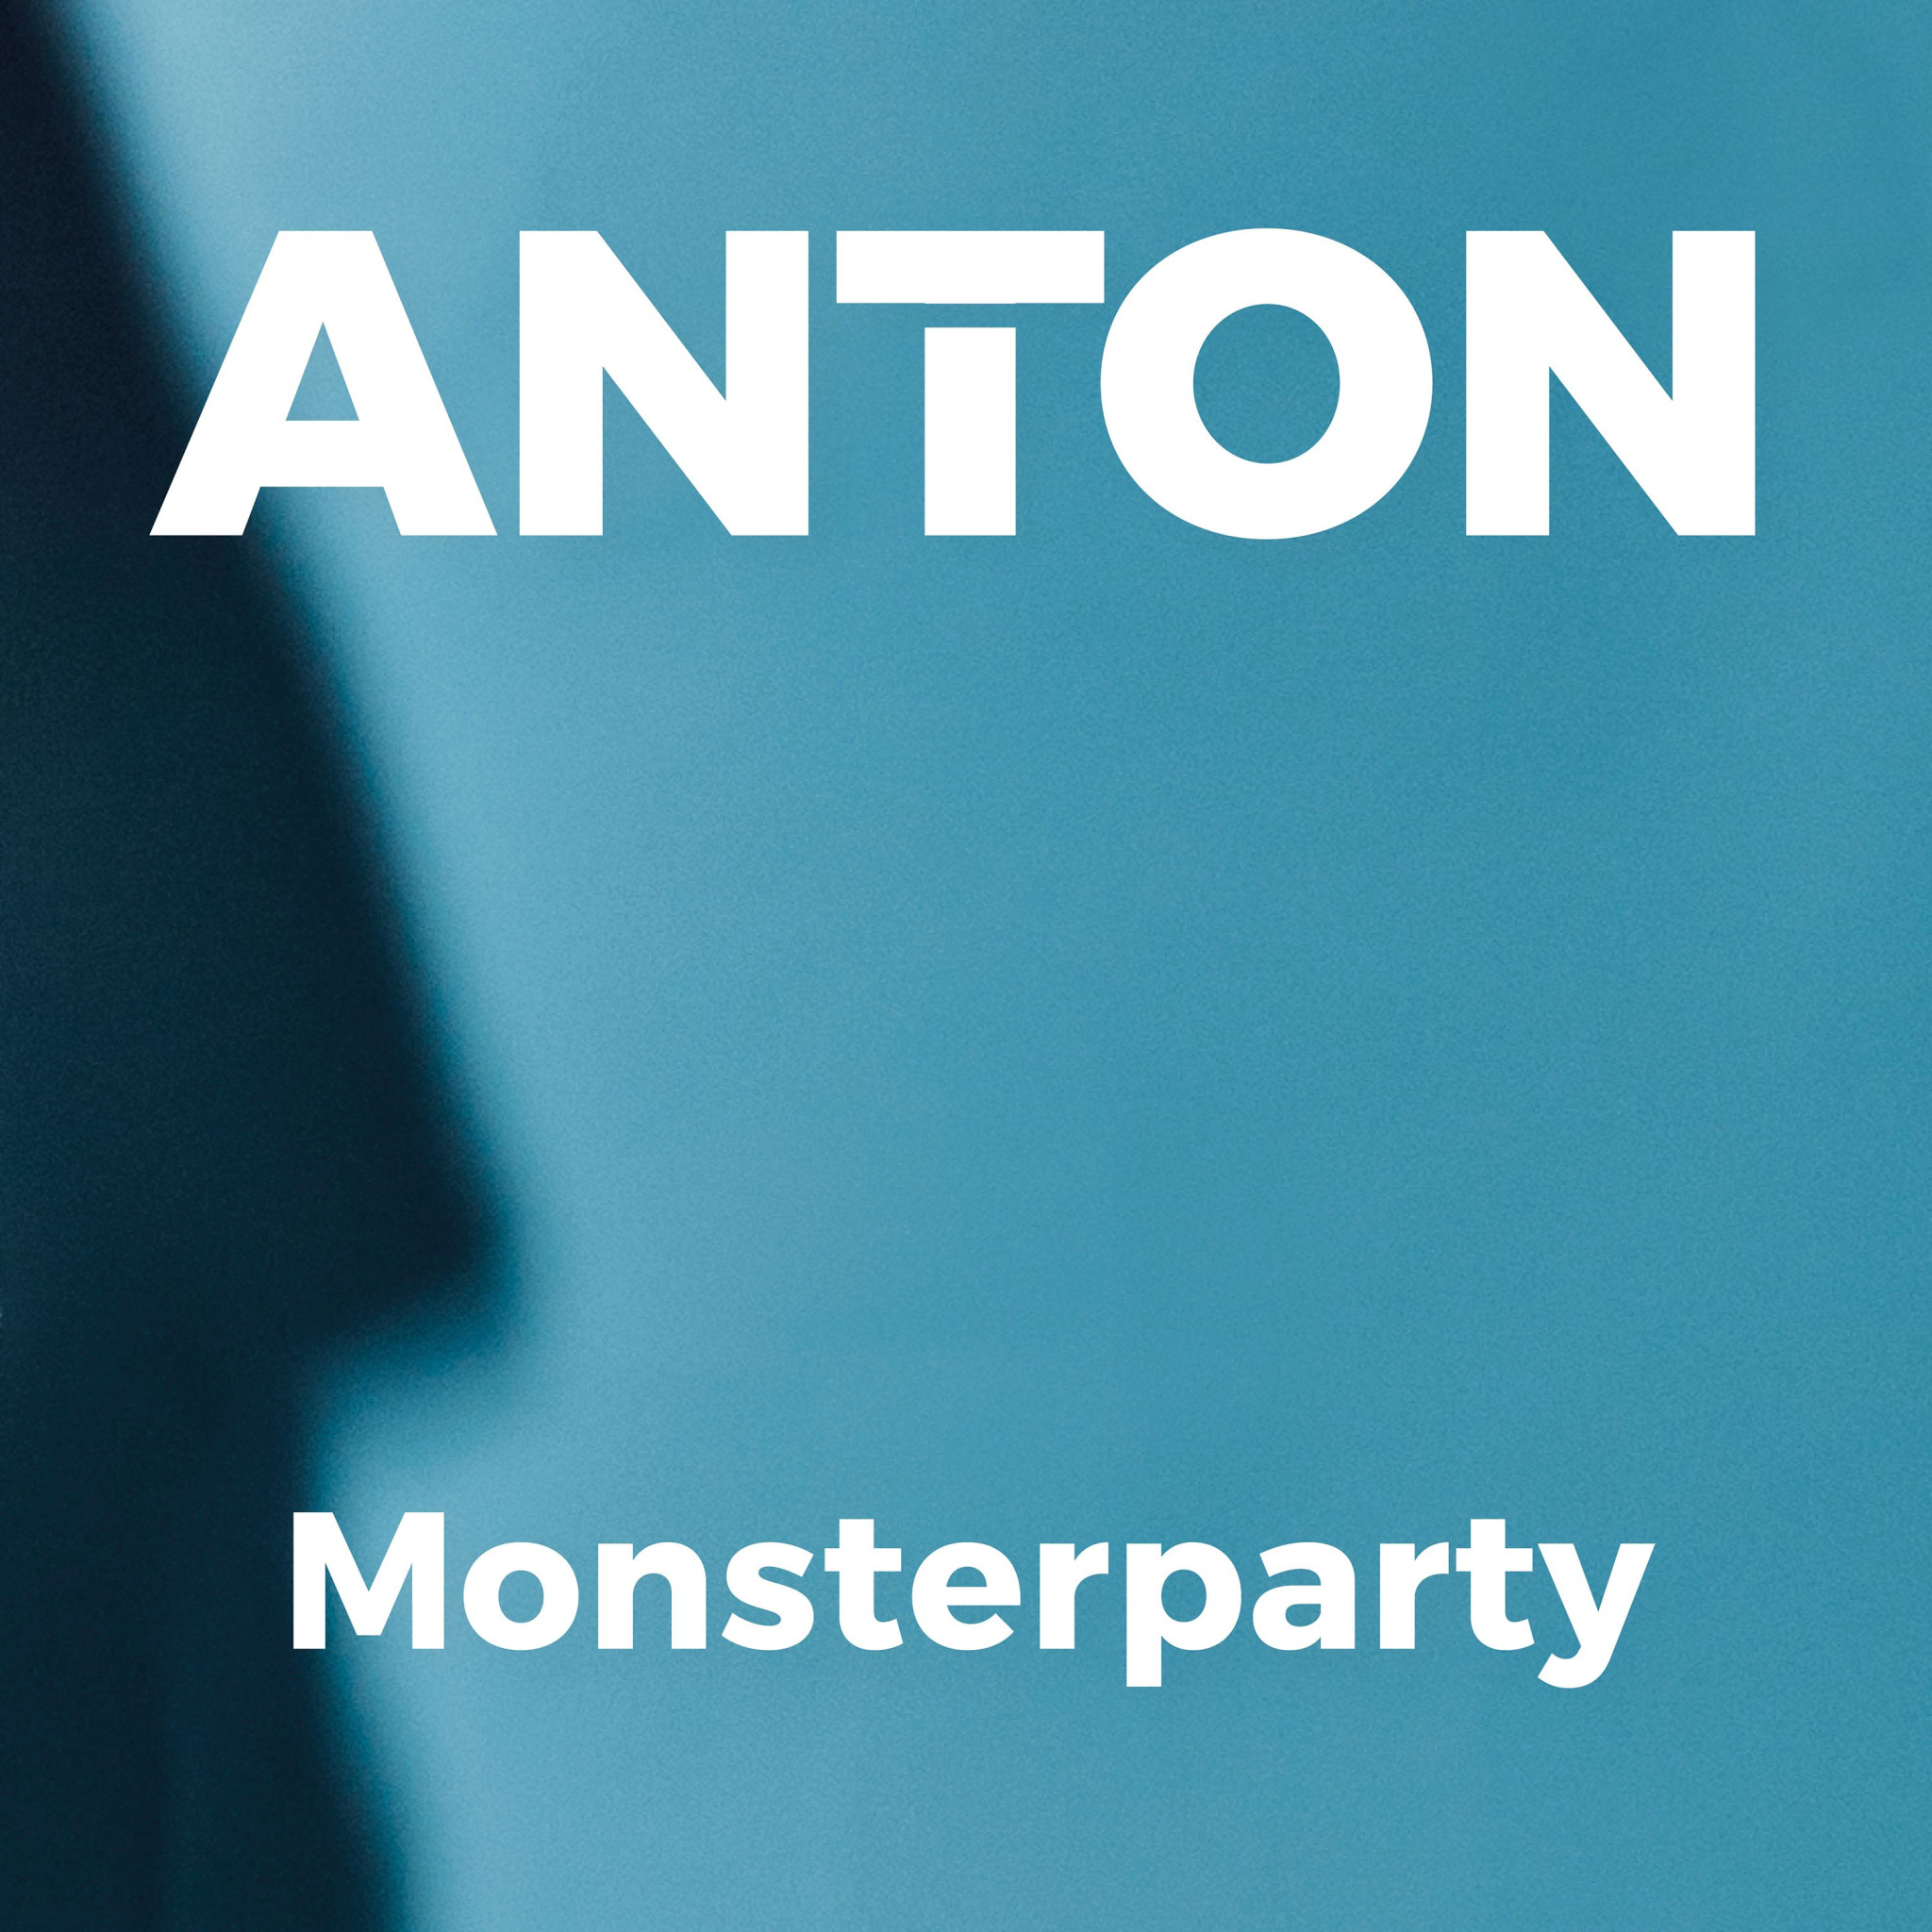 Monsterparty - ANTON